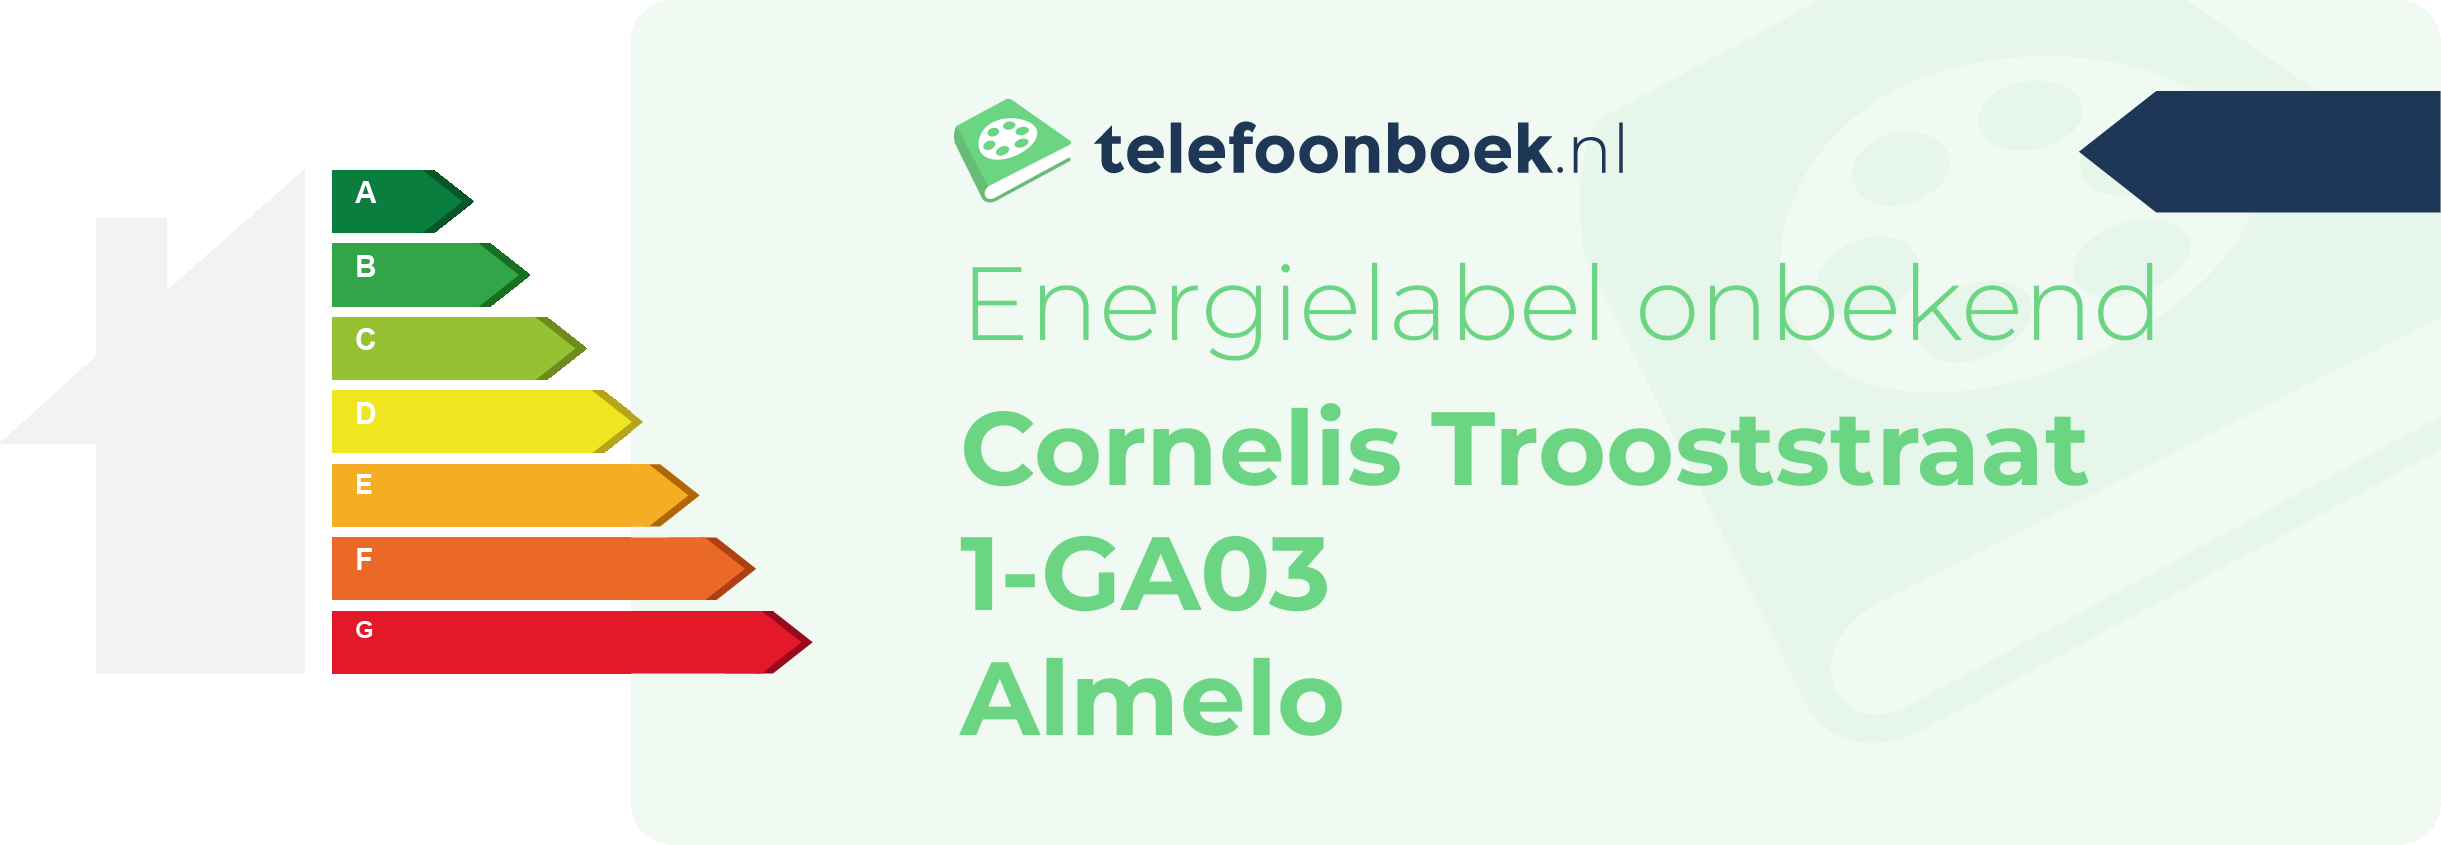 Energielabel Cornelis Trooststraat 1-GA03 Almelo